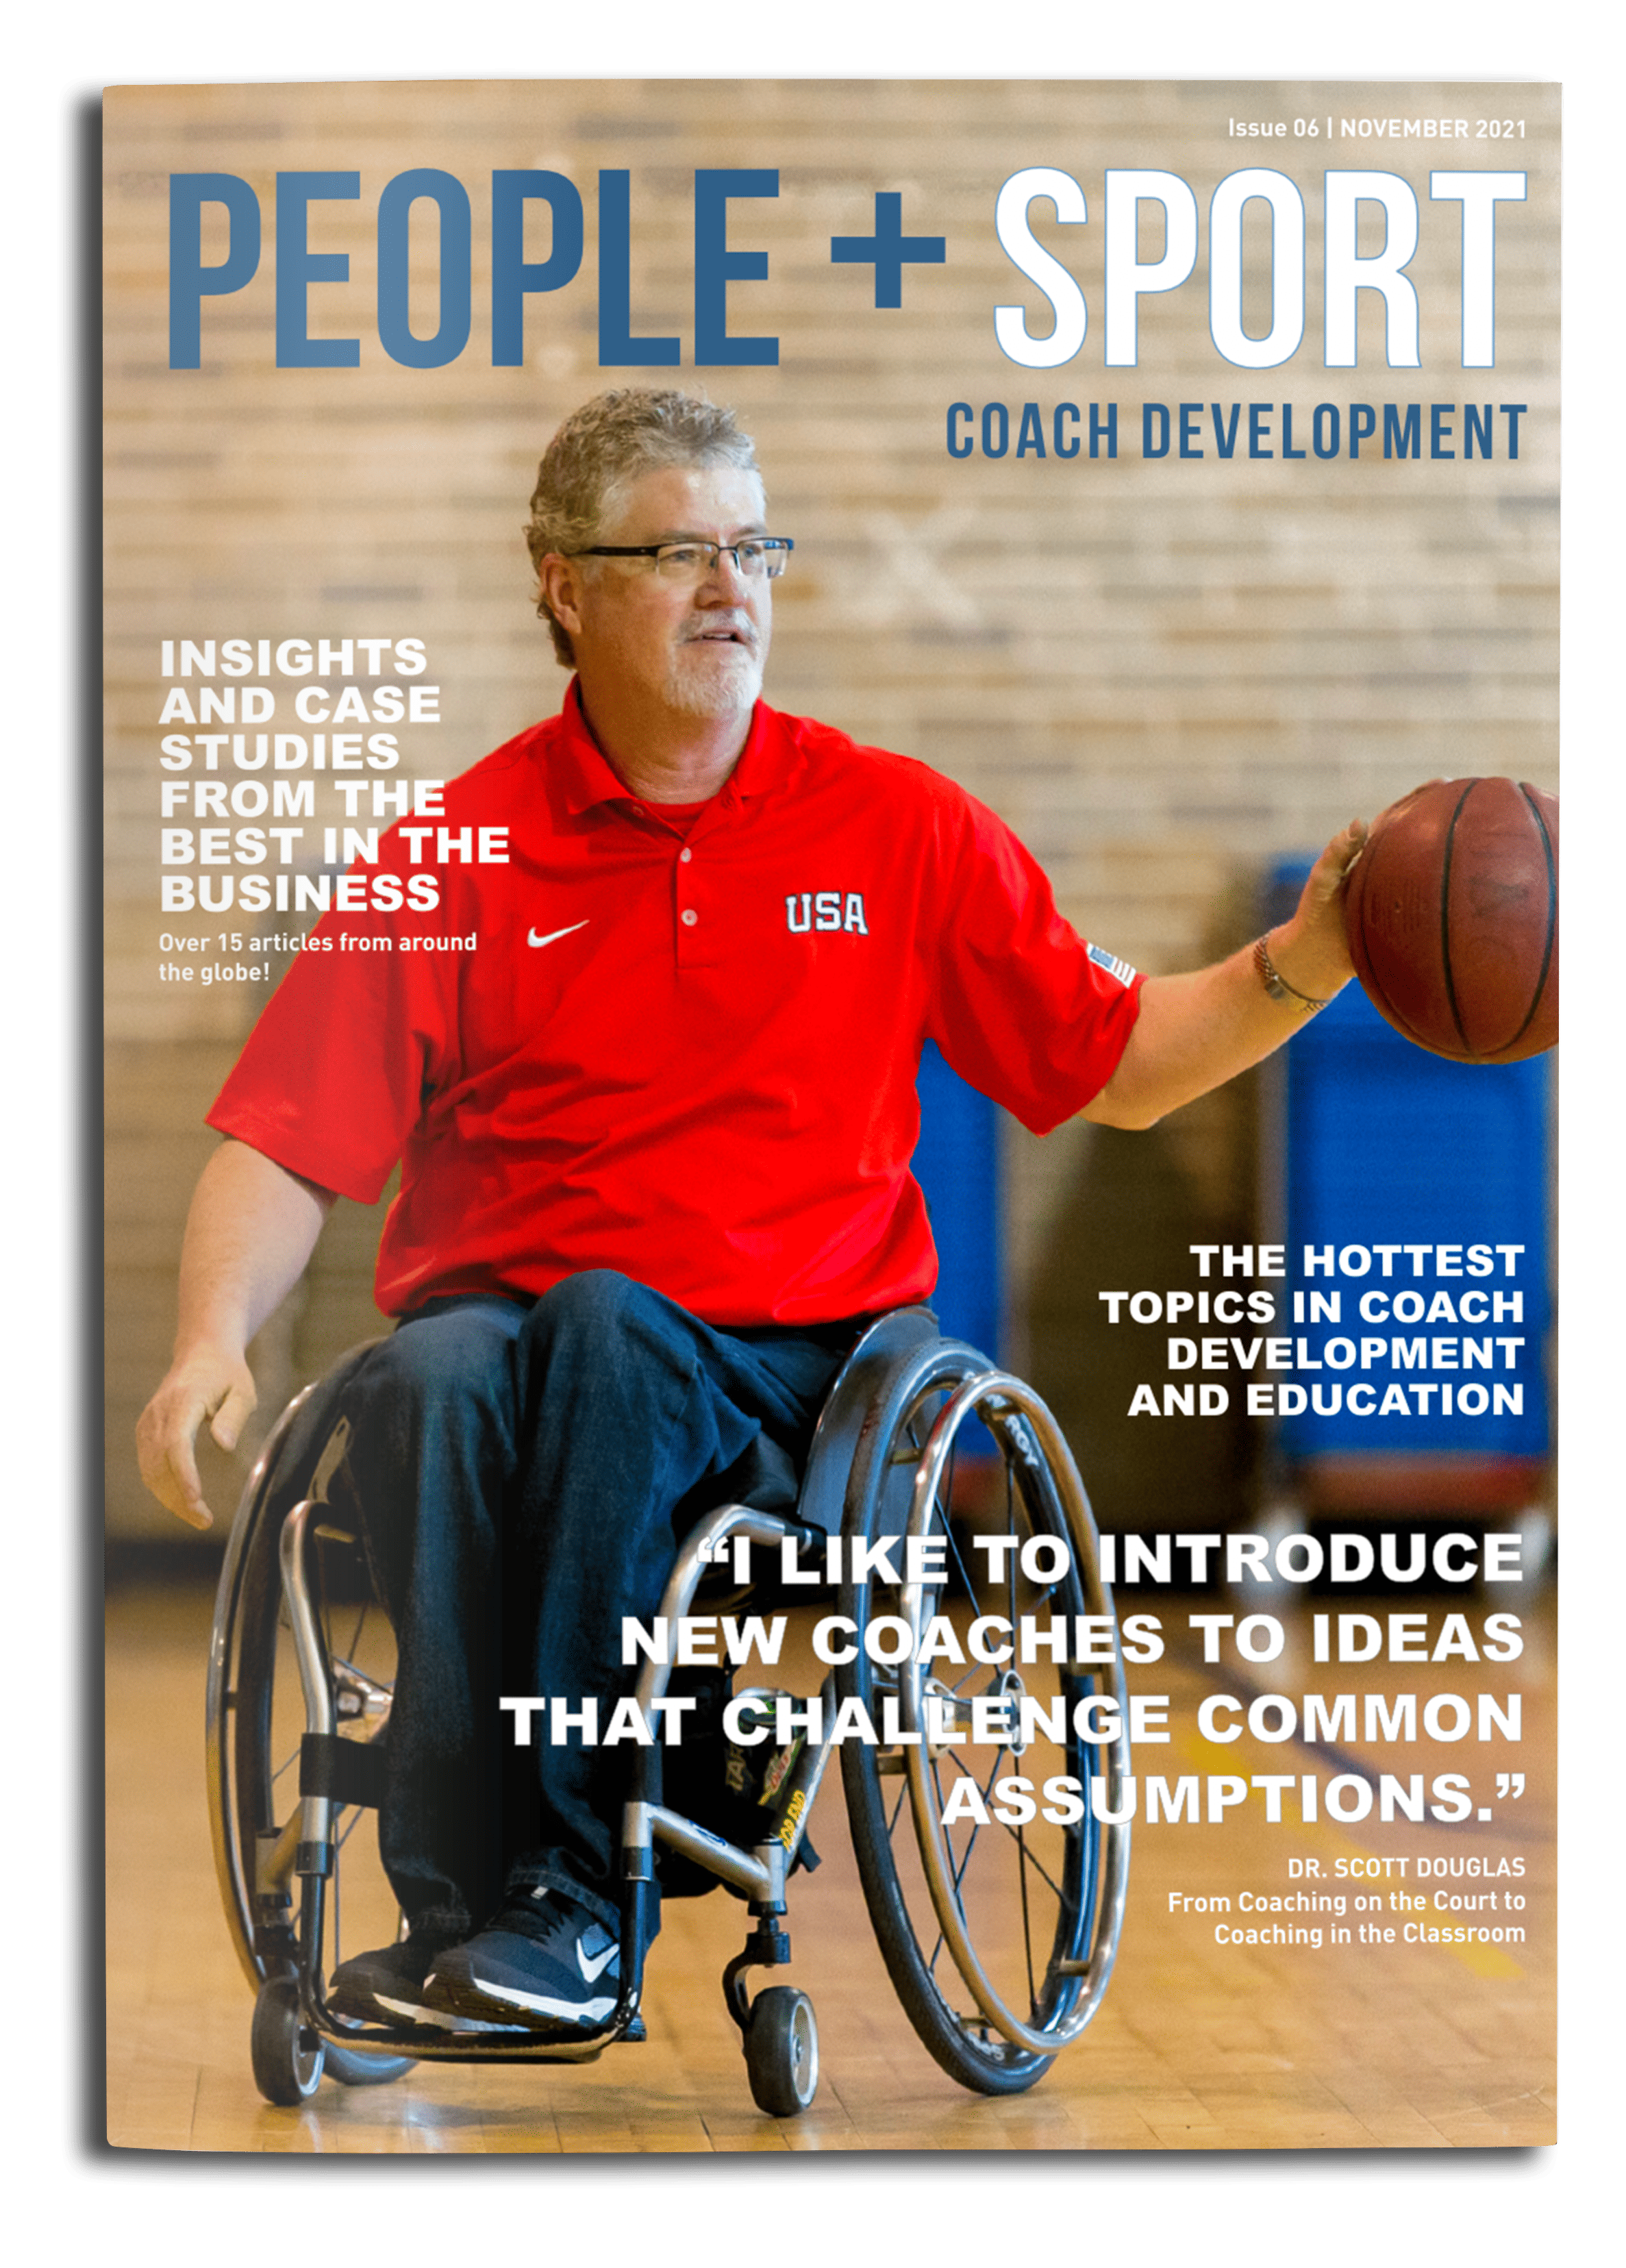 P+S Coach Development Magazine Cover Mockup